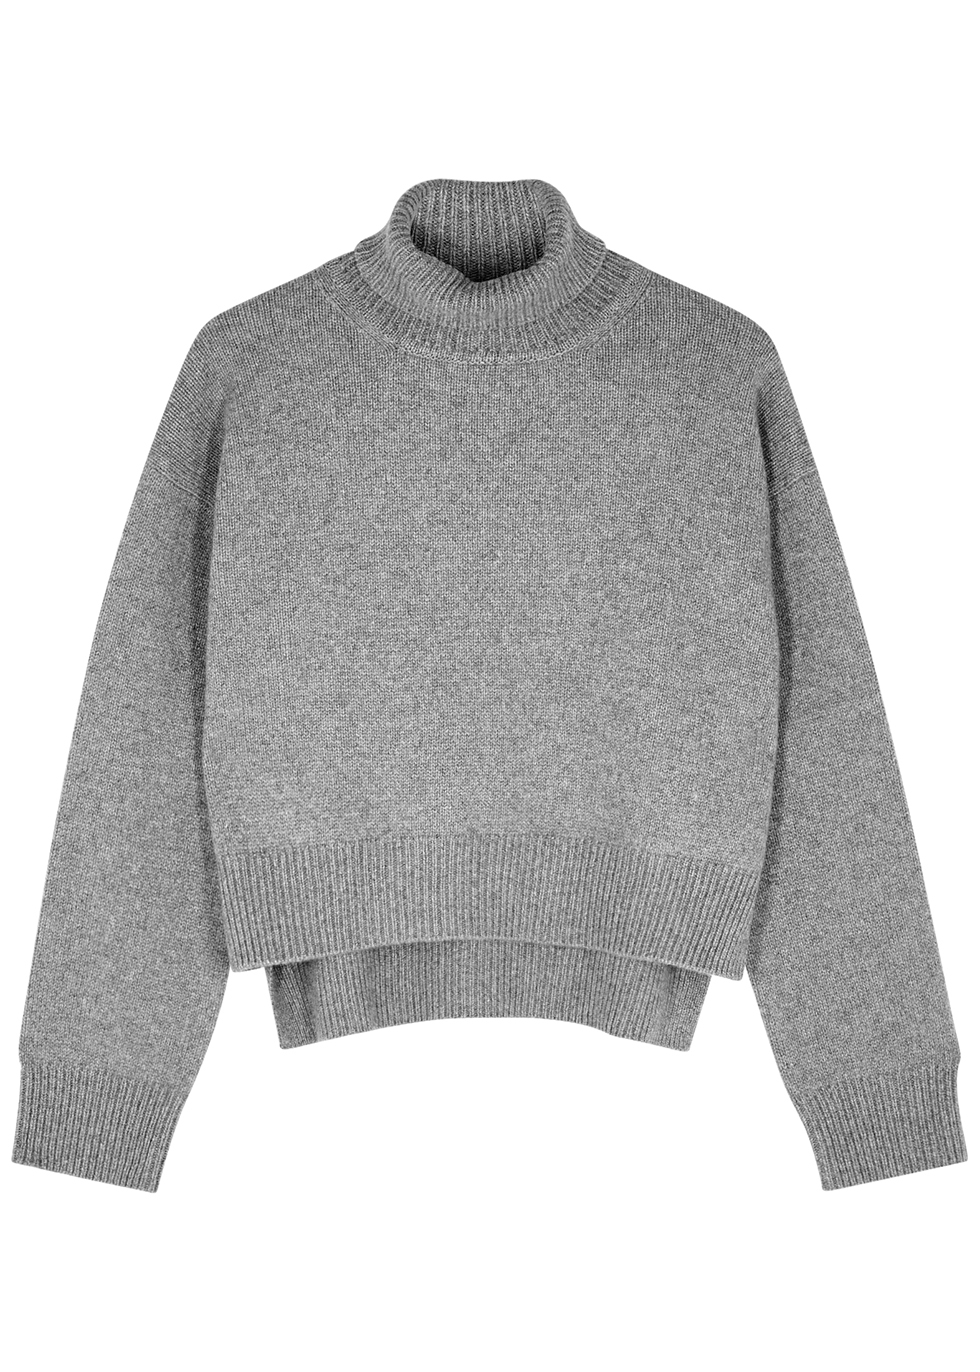 Lyn grey cashmere-blend jumper